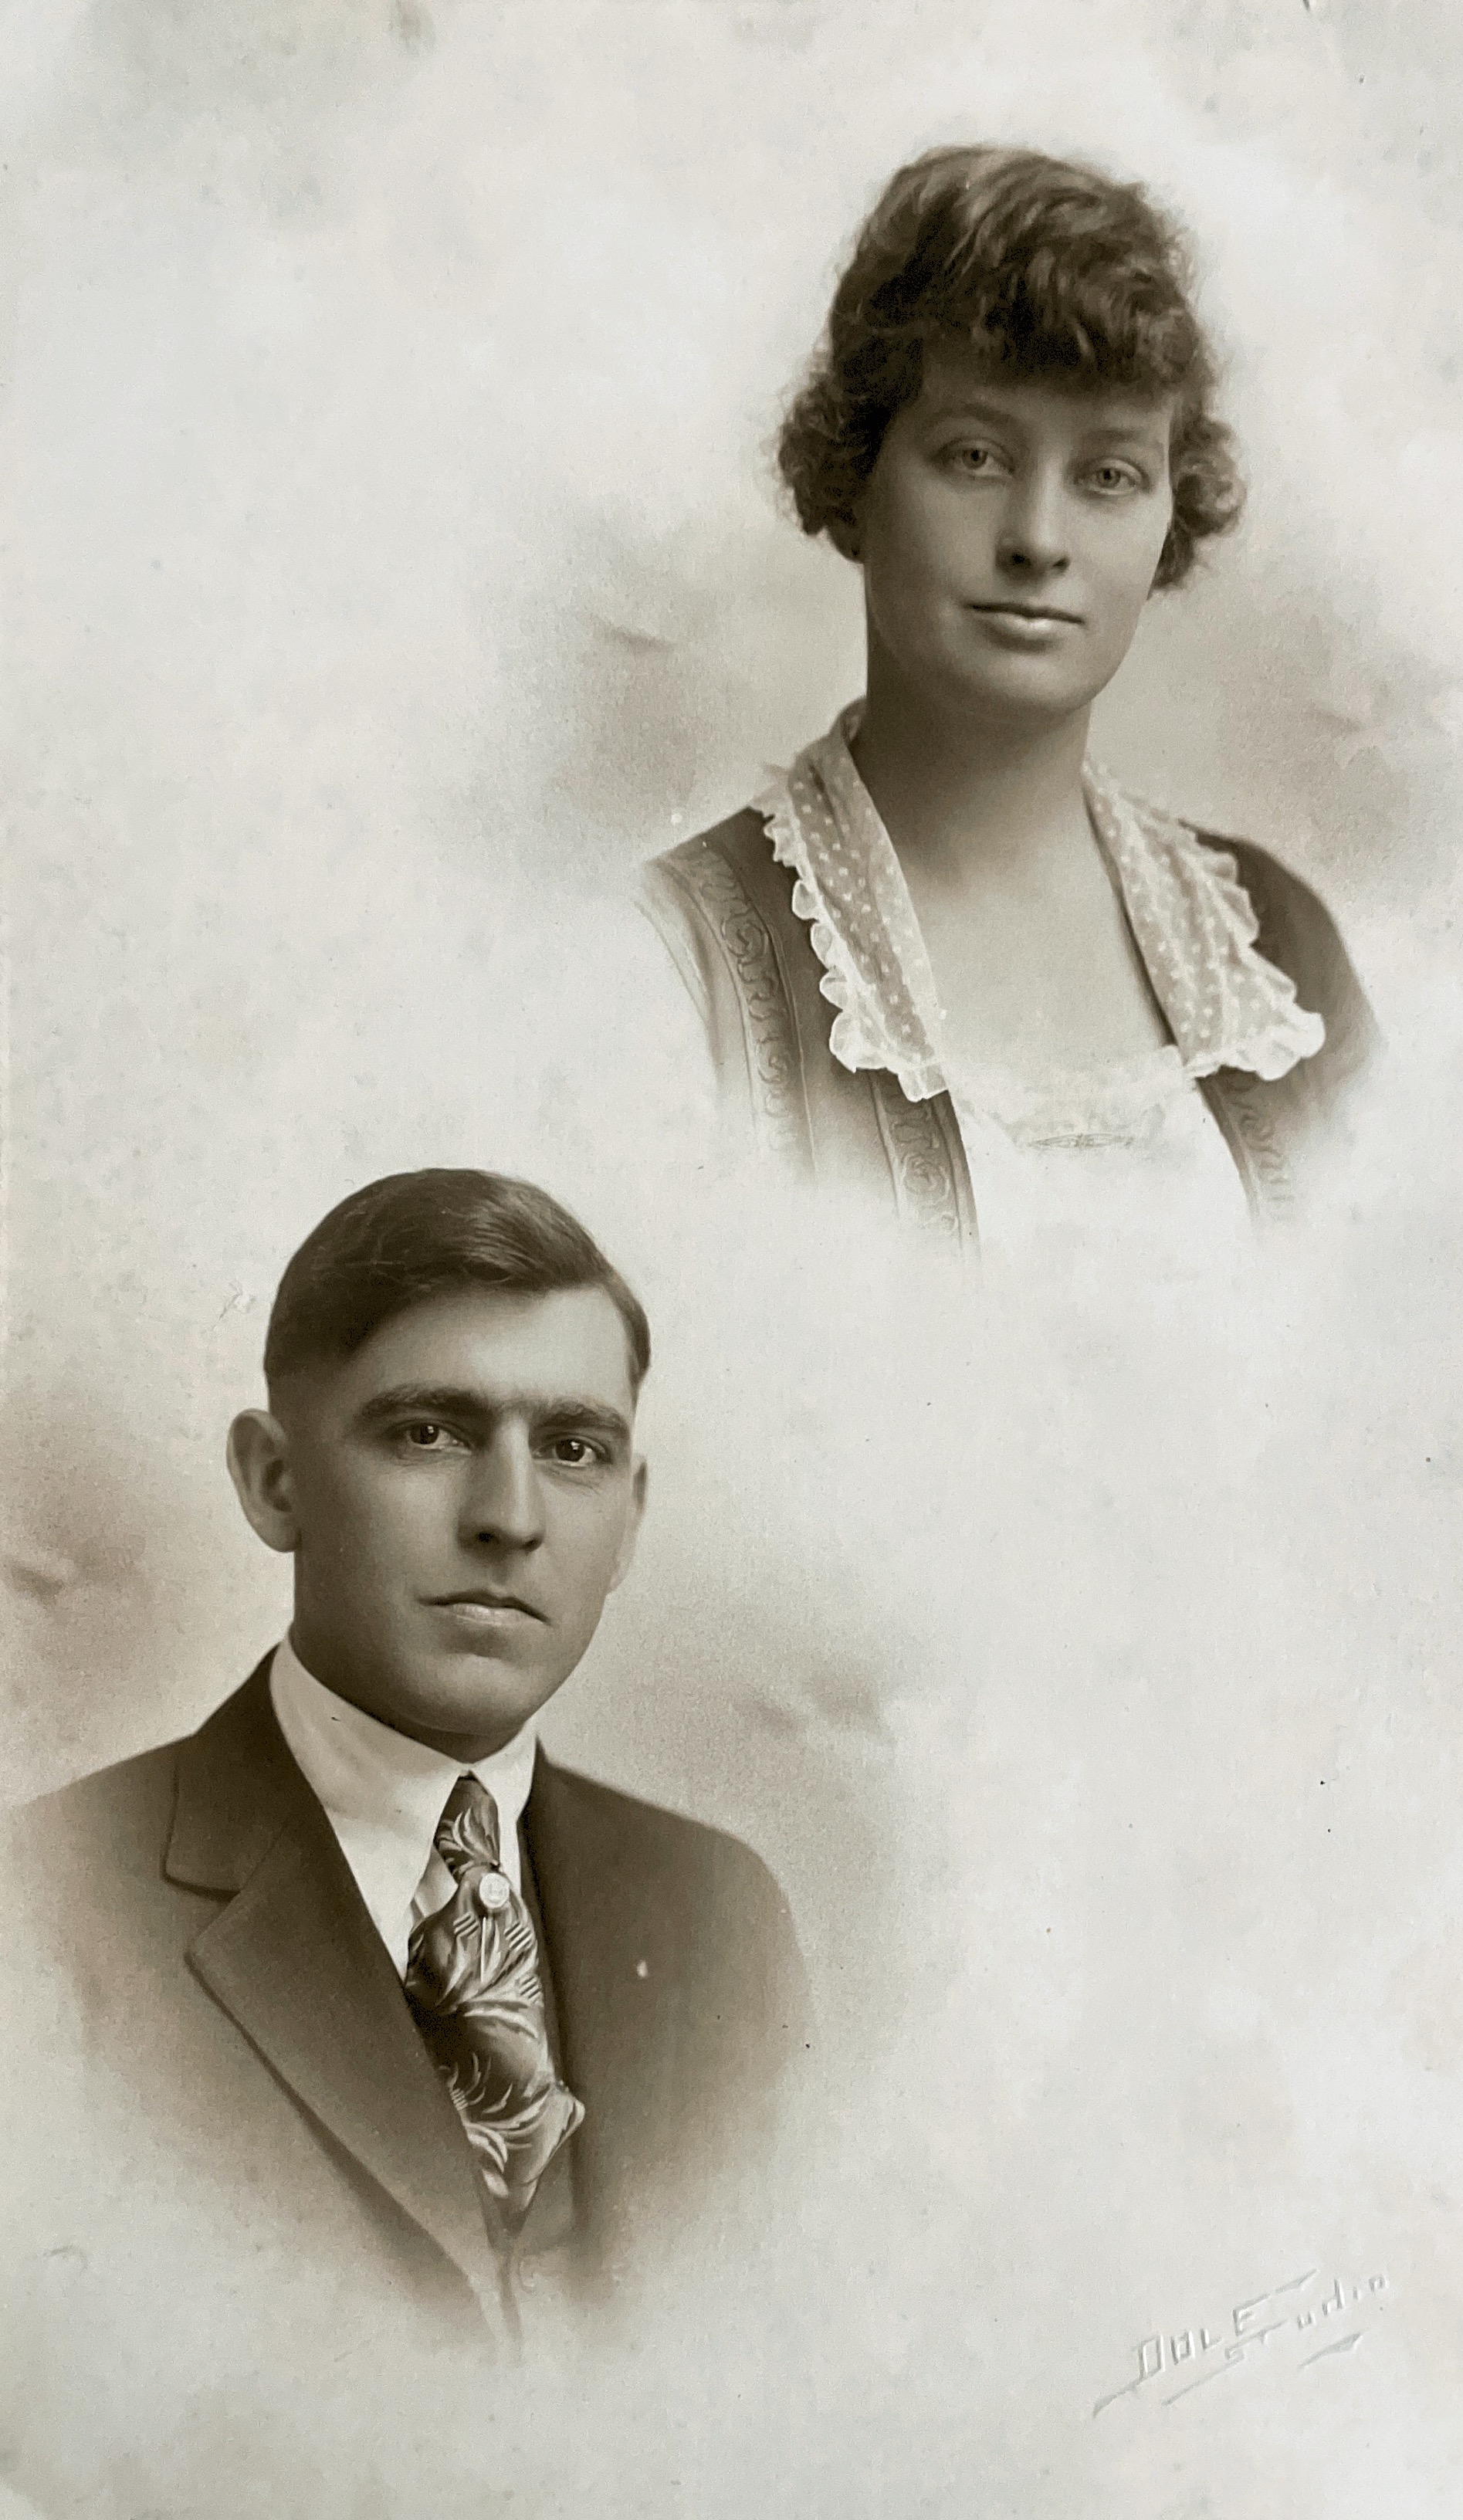 Bessie Hughes - Hugh S. Hughes younger sister, born 1891 Ernest Hegeman (plumber) Marriage photo circa 1920